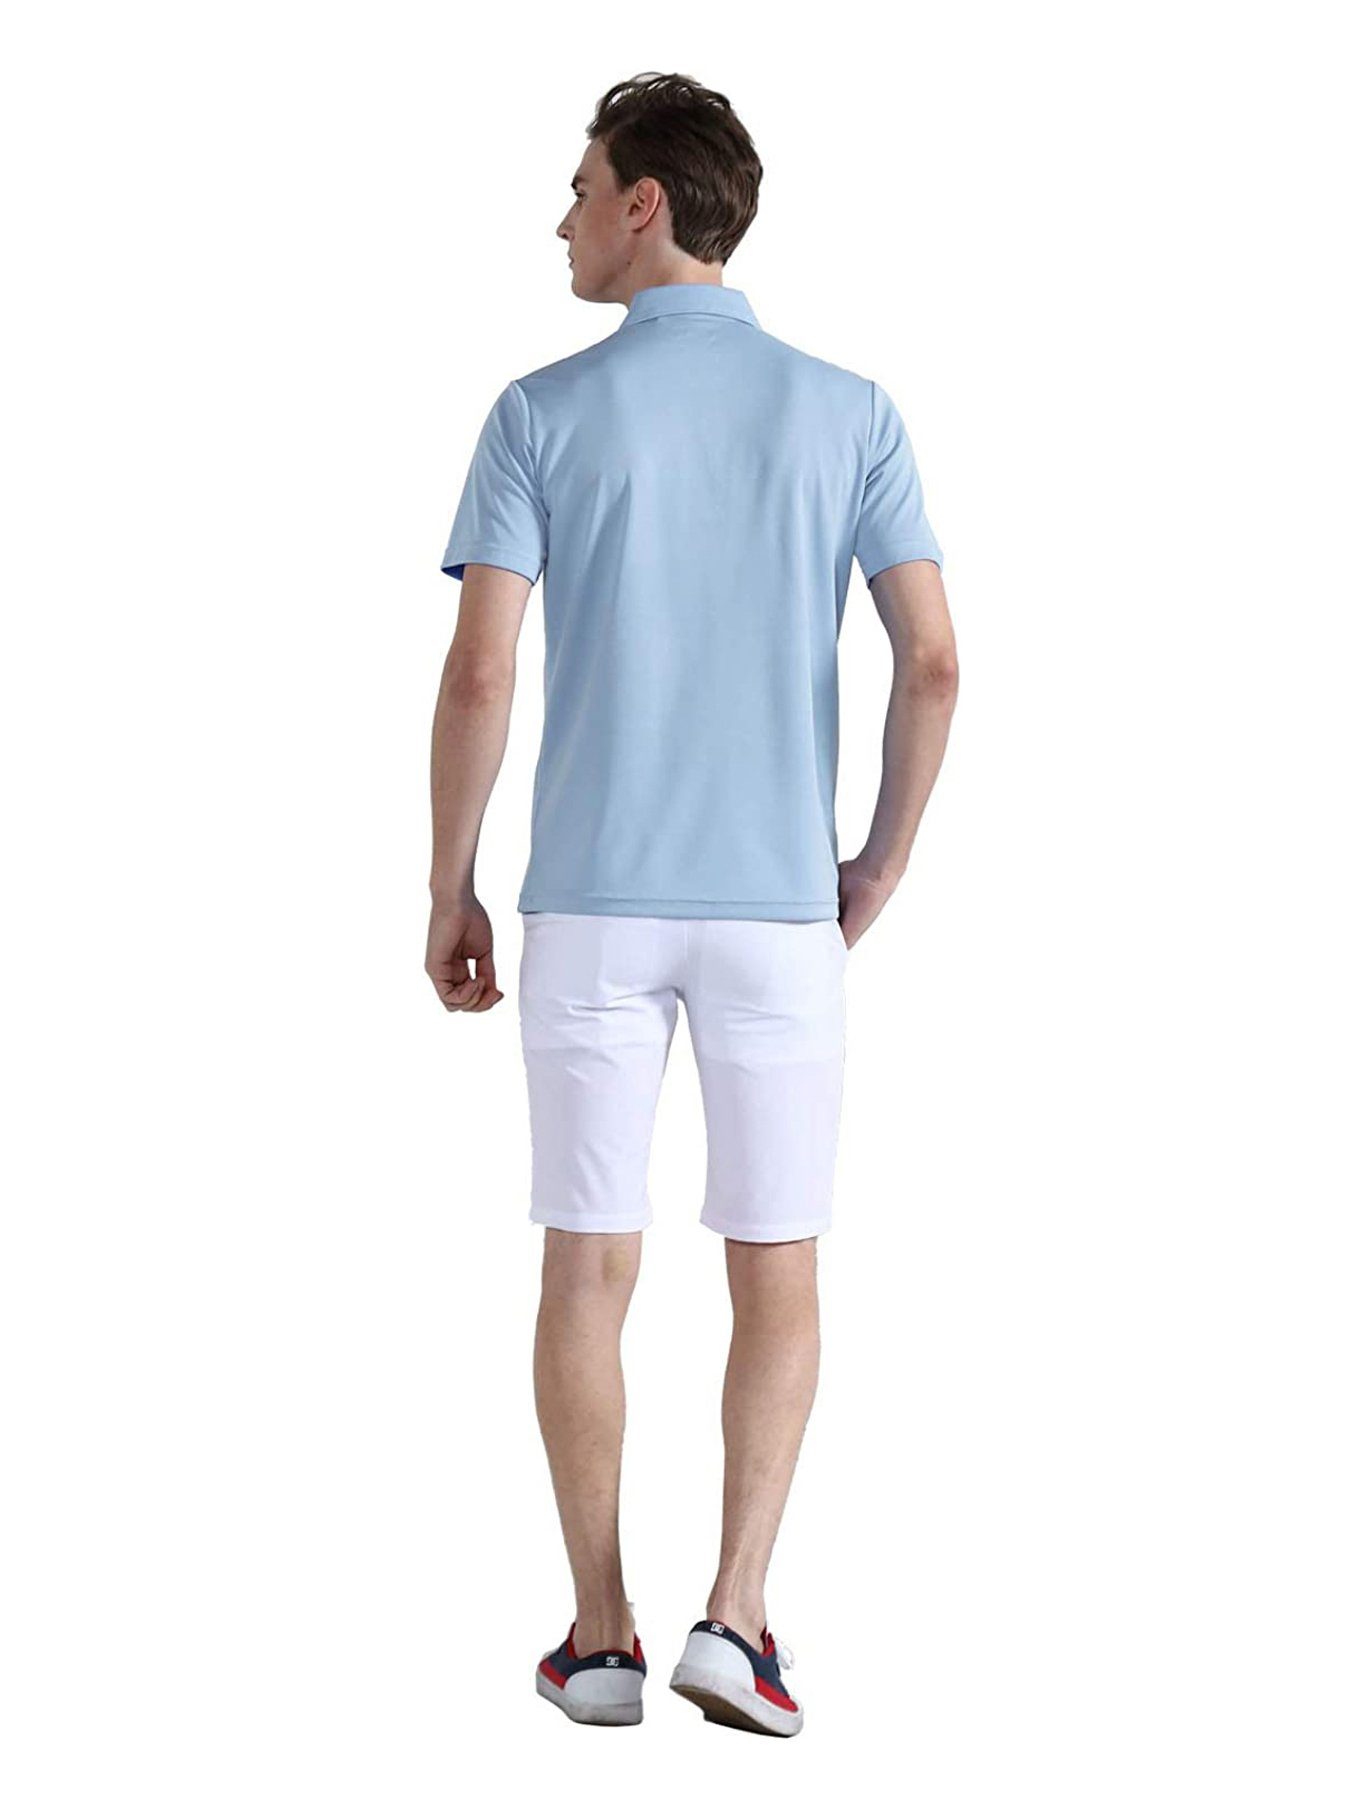 Herren Standard Golf Gemütlich Poloshirt DEBAIJIA DEBAIJIA Leicht Hellblau Poloshirt Kurzarm Fit